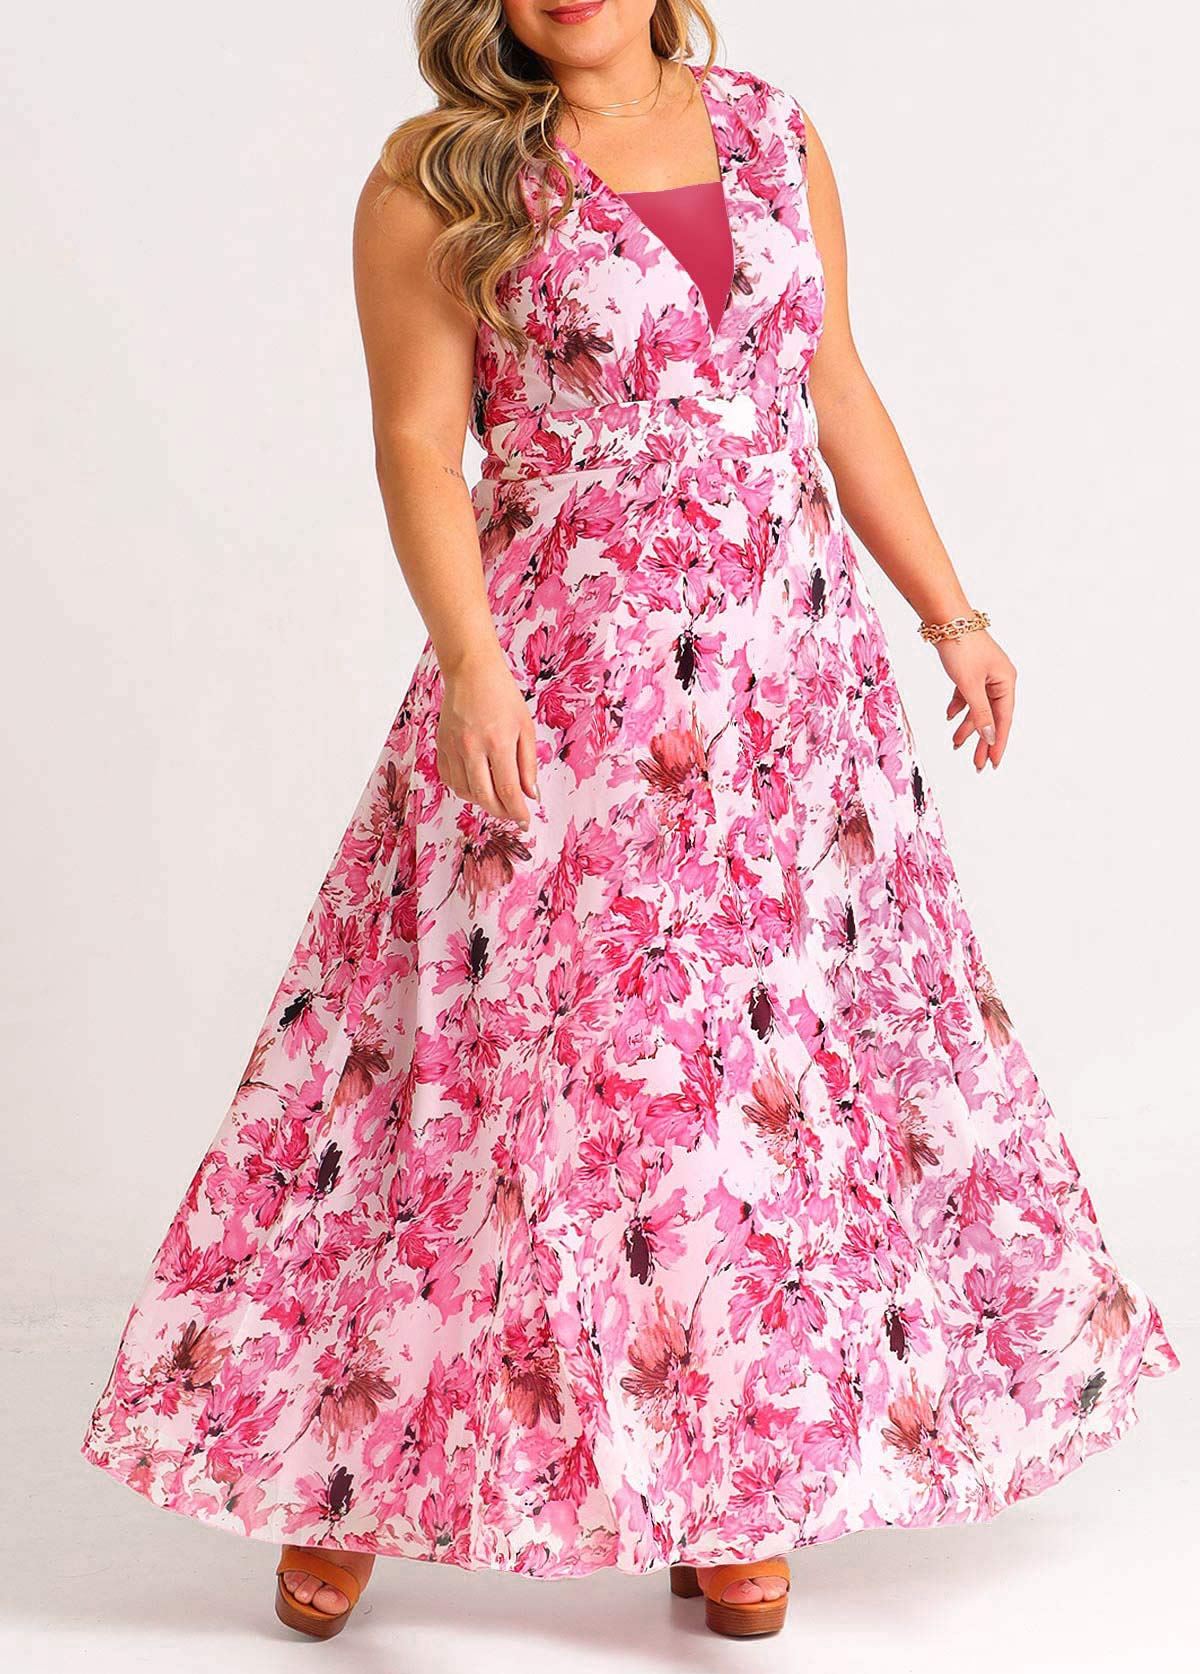 Sleeveless Floral Print Pink Chiffon Plus Size Dress